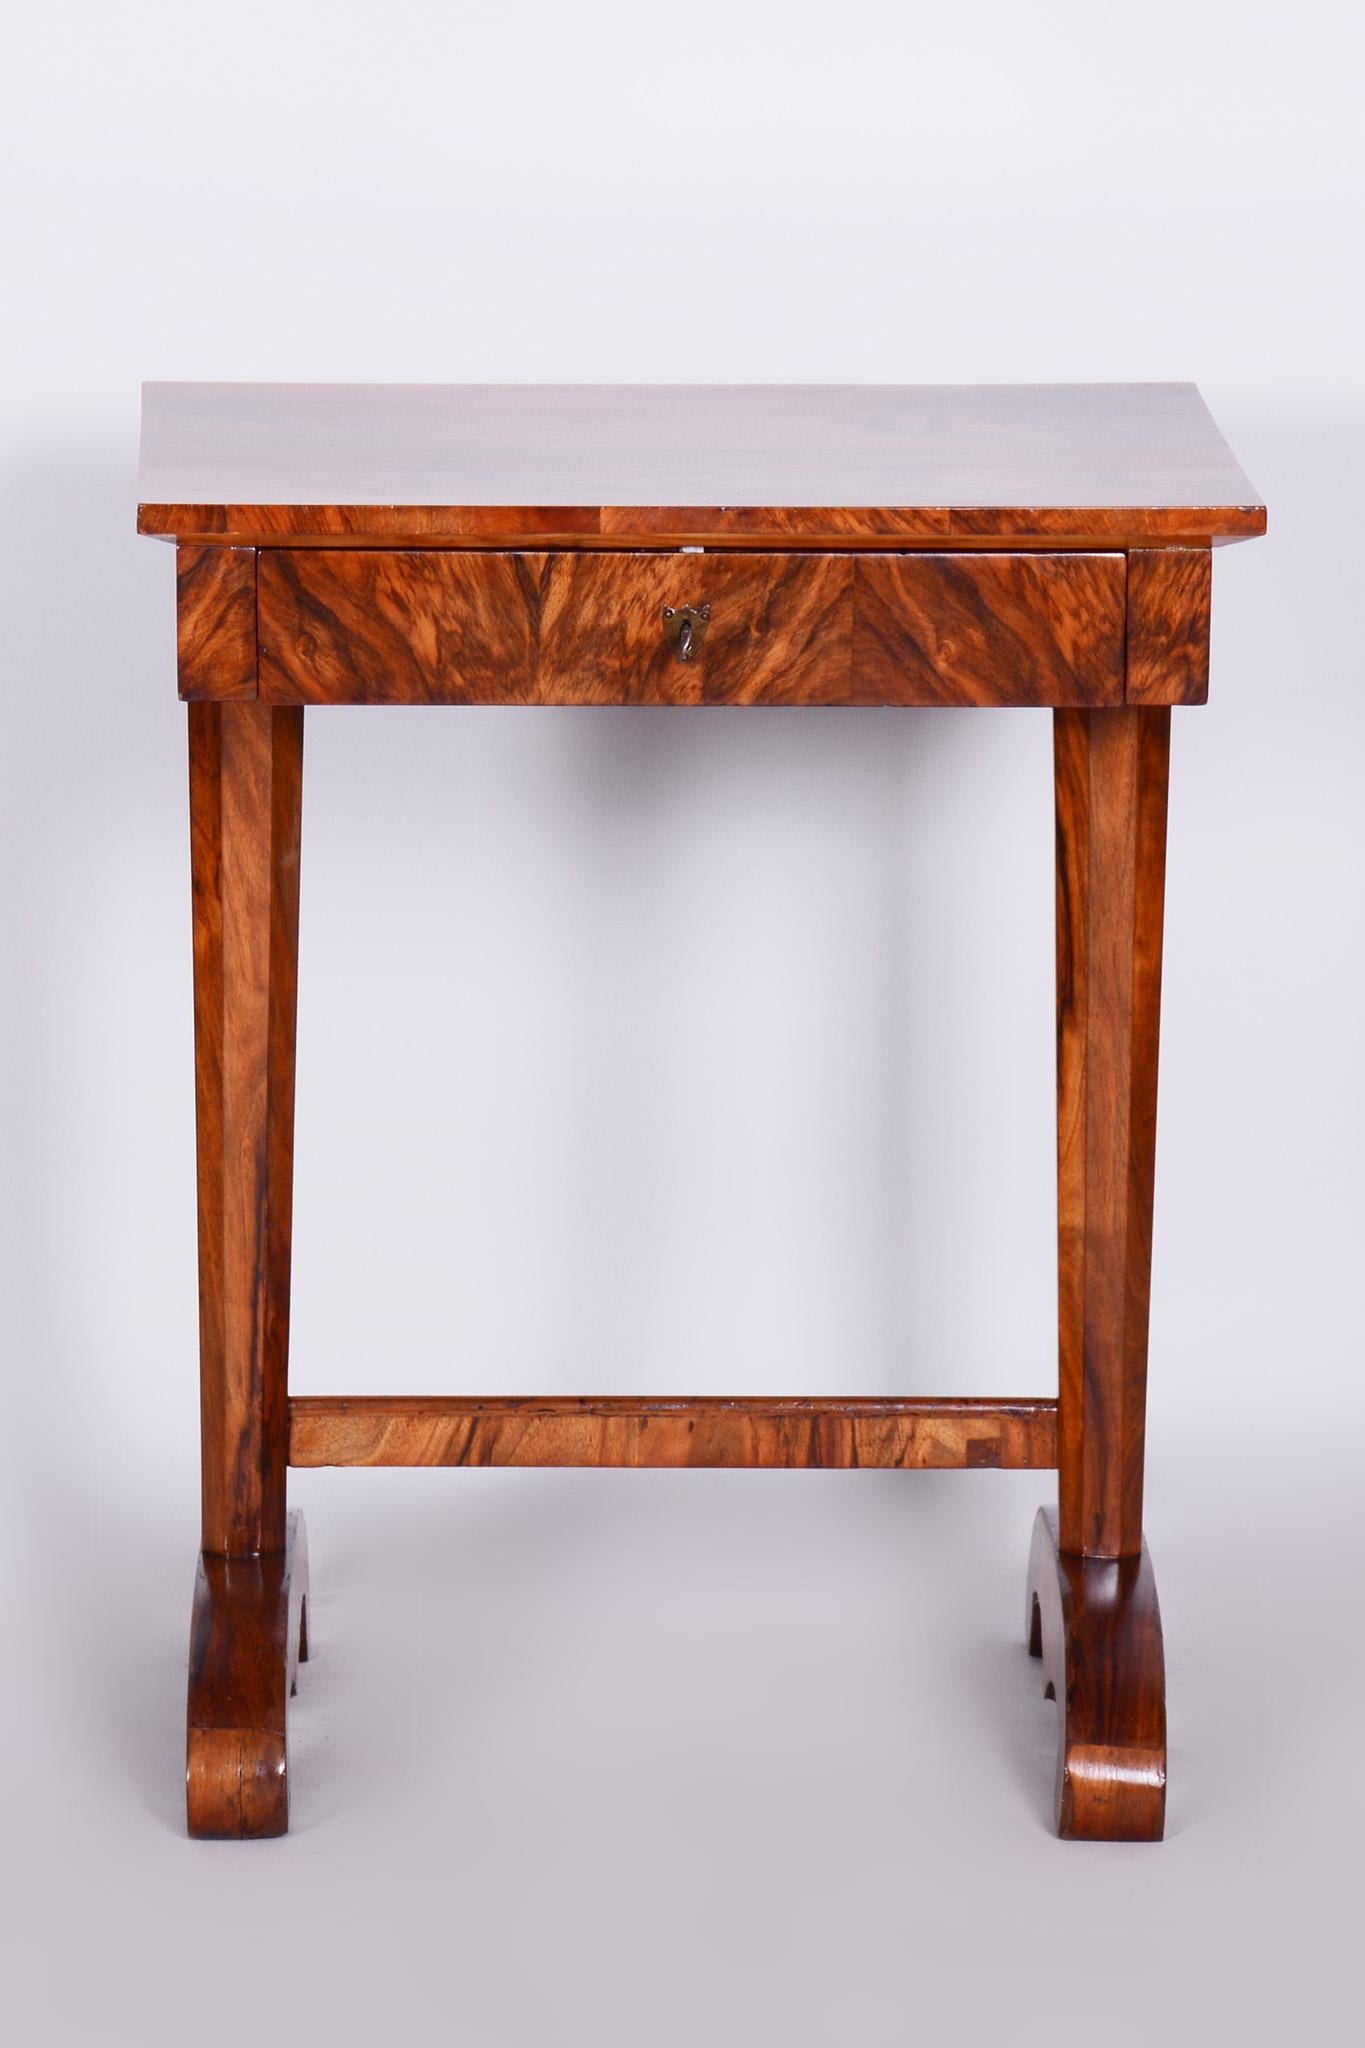 Small biedermeier side table. Restored.

Source: Austria
Period: 1820-1829
Material: Walnut

Revived original polish.